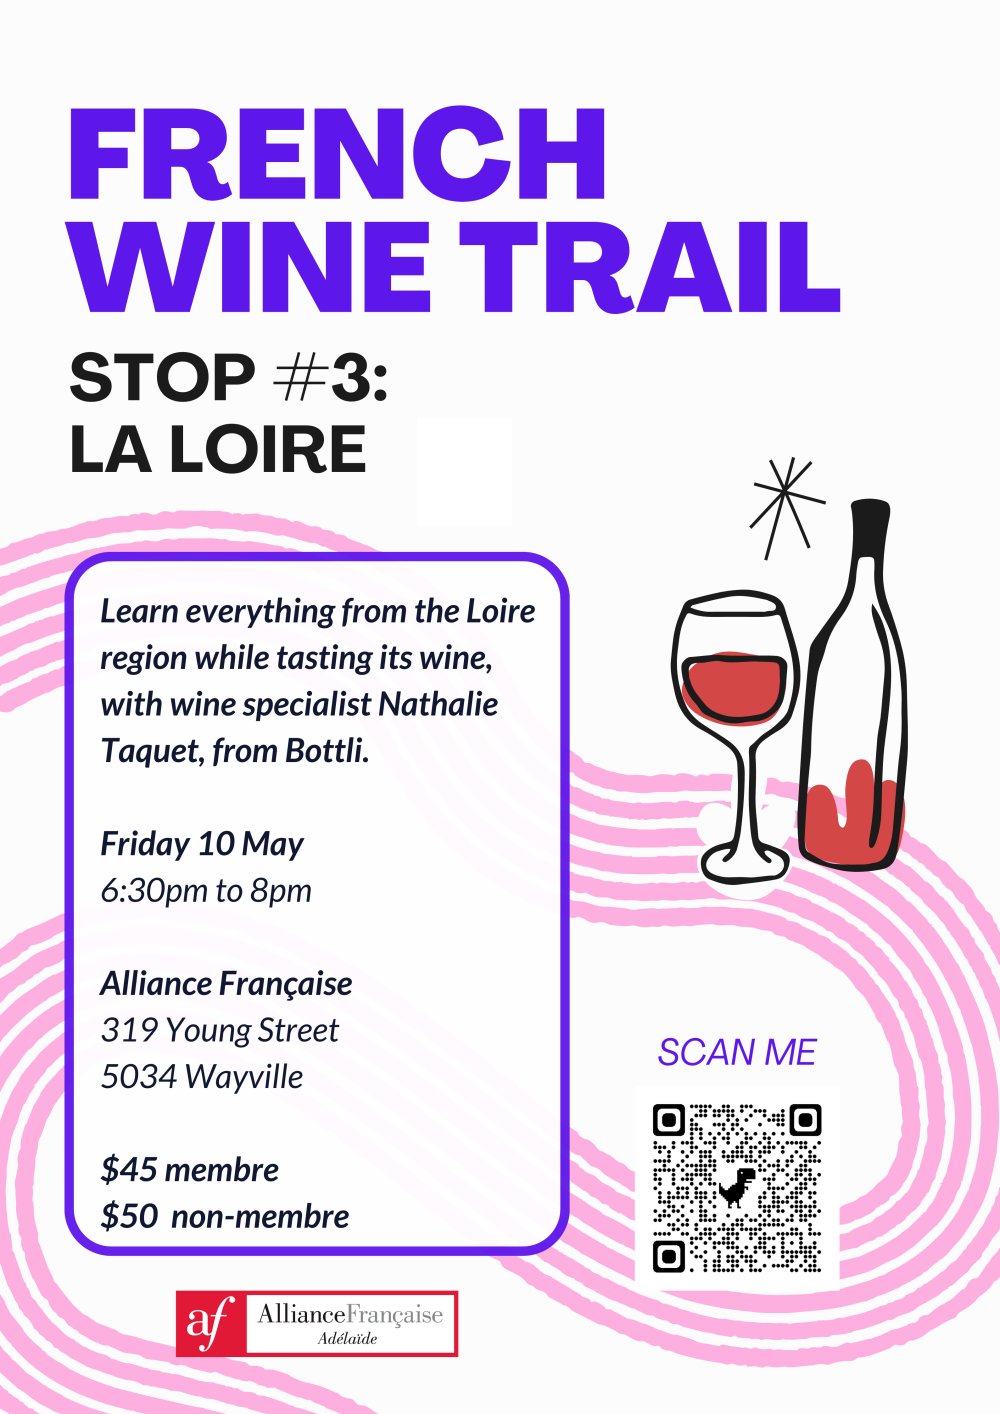 French Wine Trail #3 La Loire